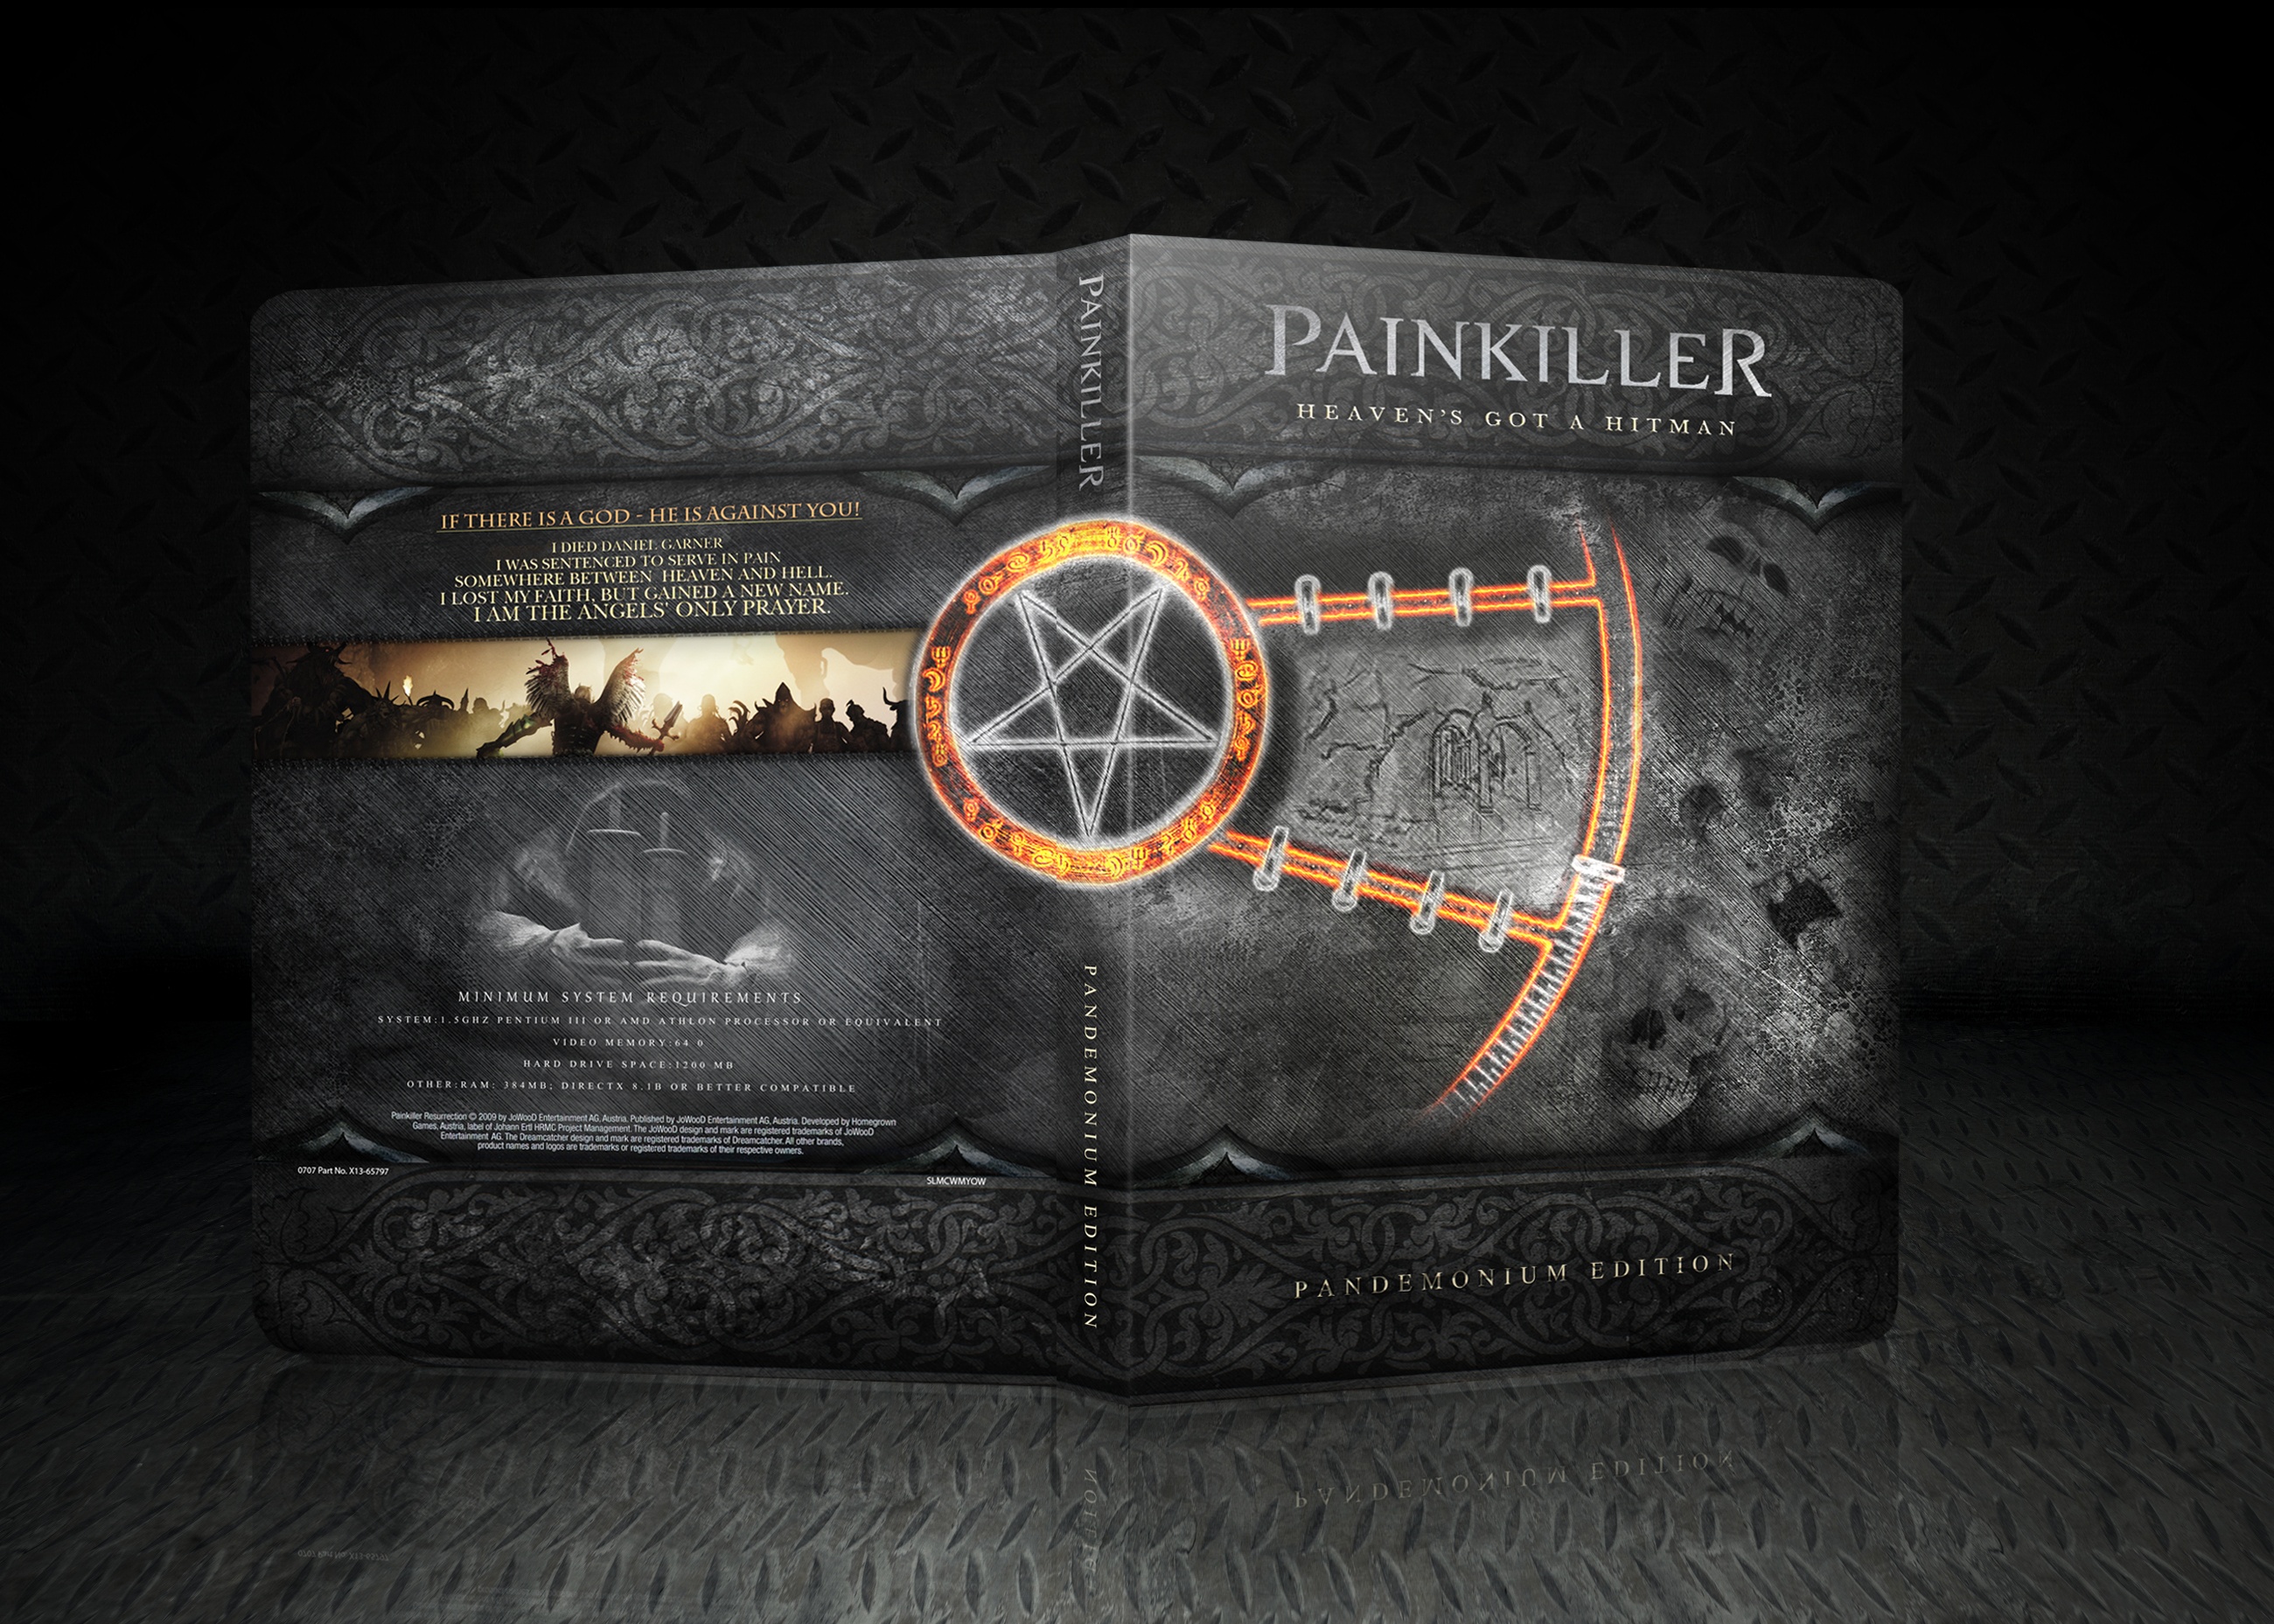 Painkiller Pandemonium Edition box cover